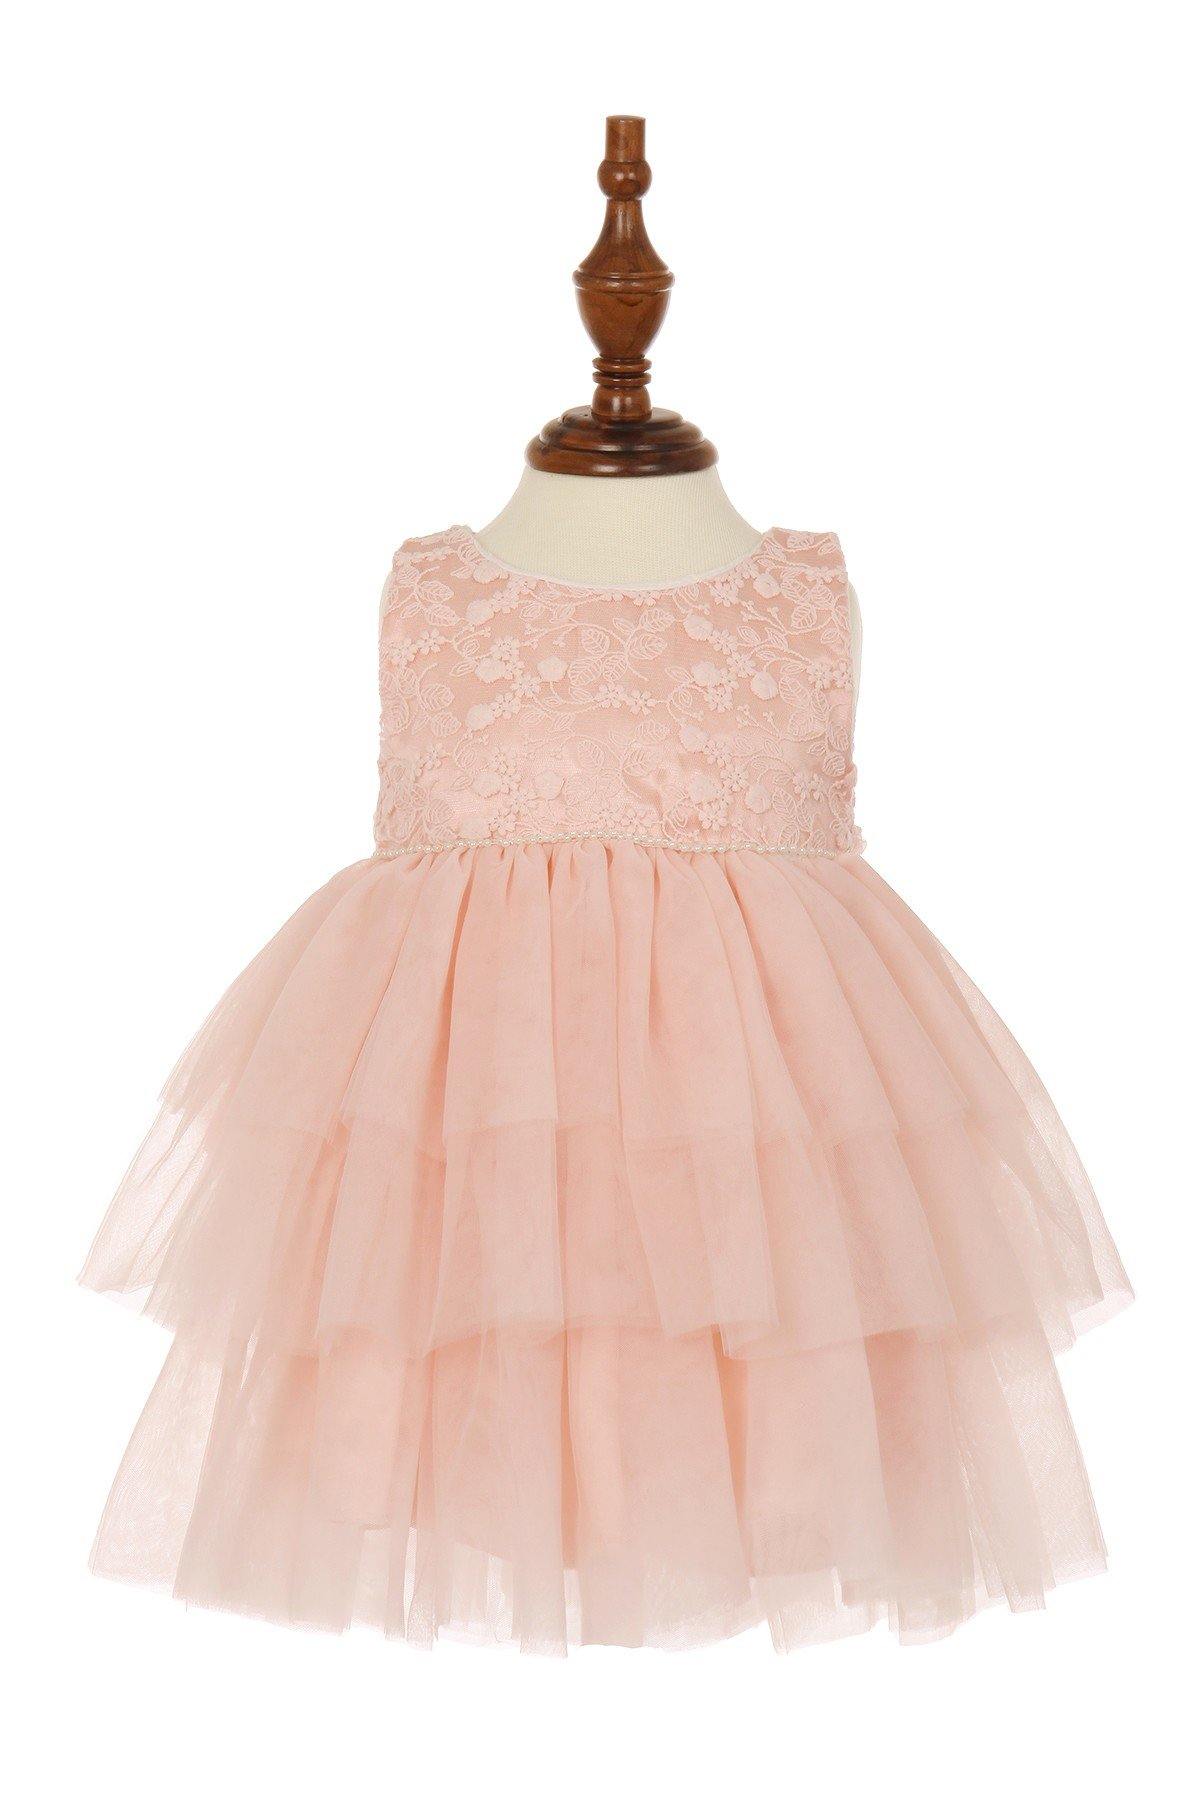 Elegant Flower Girl Dress Sleeveless - The Dress Outlet Cinderella Couture